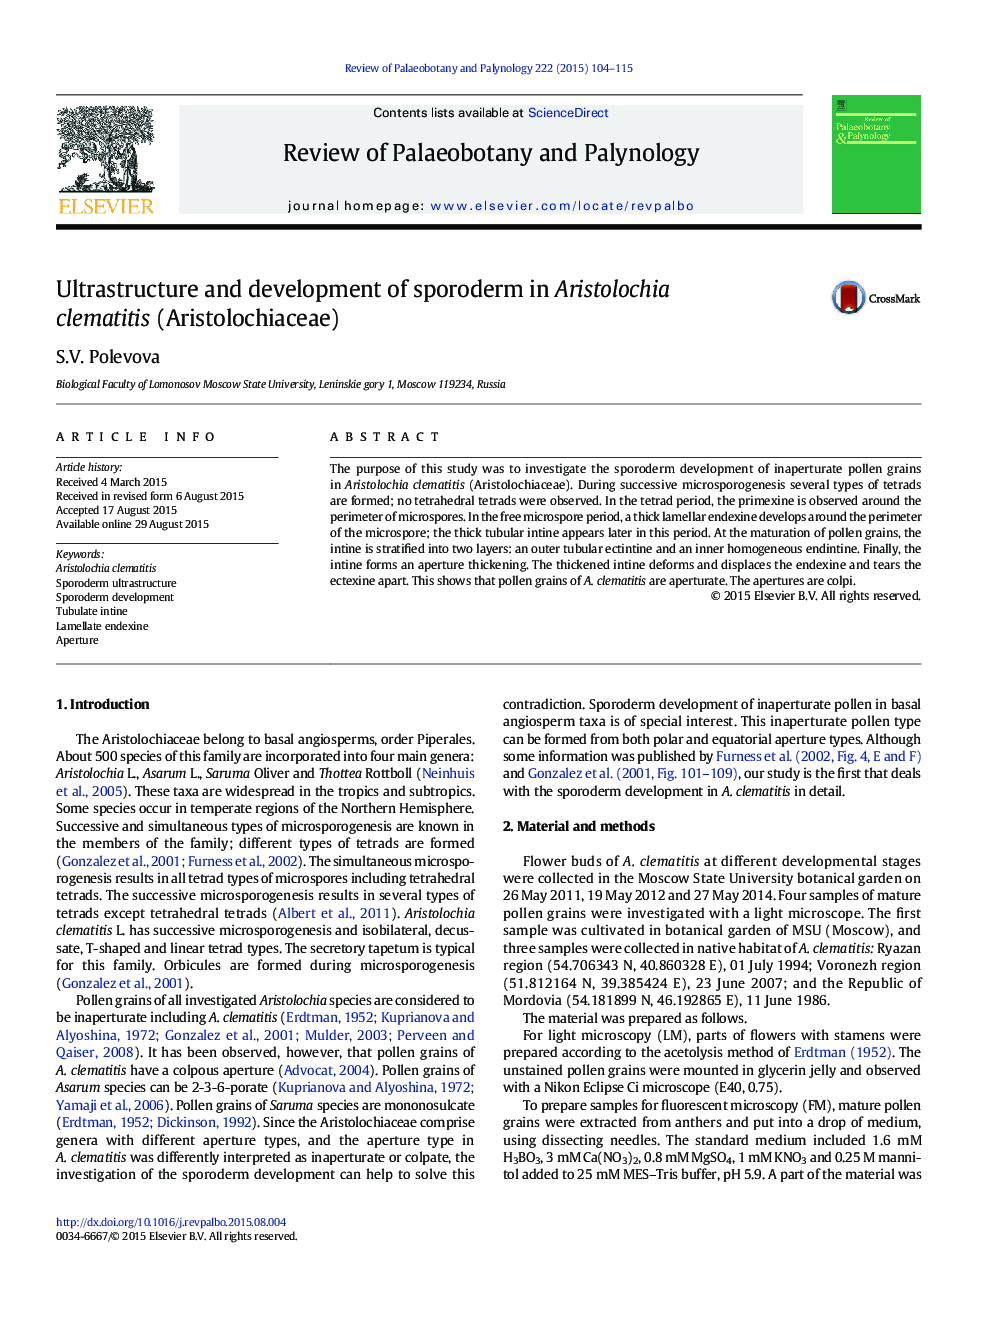 Ultrastructure and development of sporoderm in Aristolochia clematitis (Aristolochiaceae)